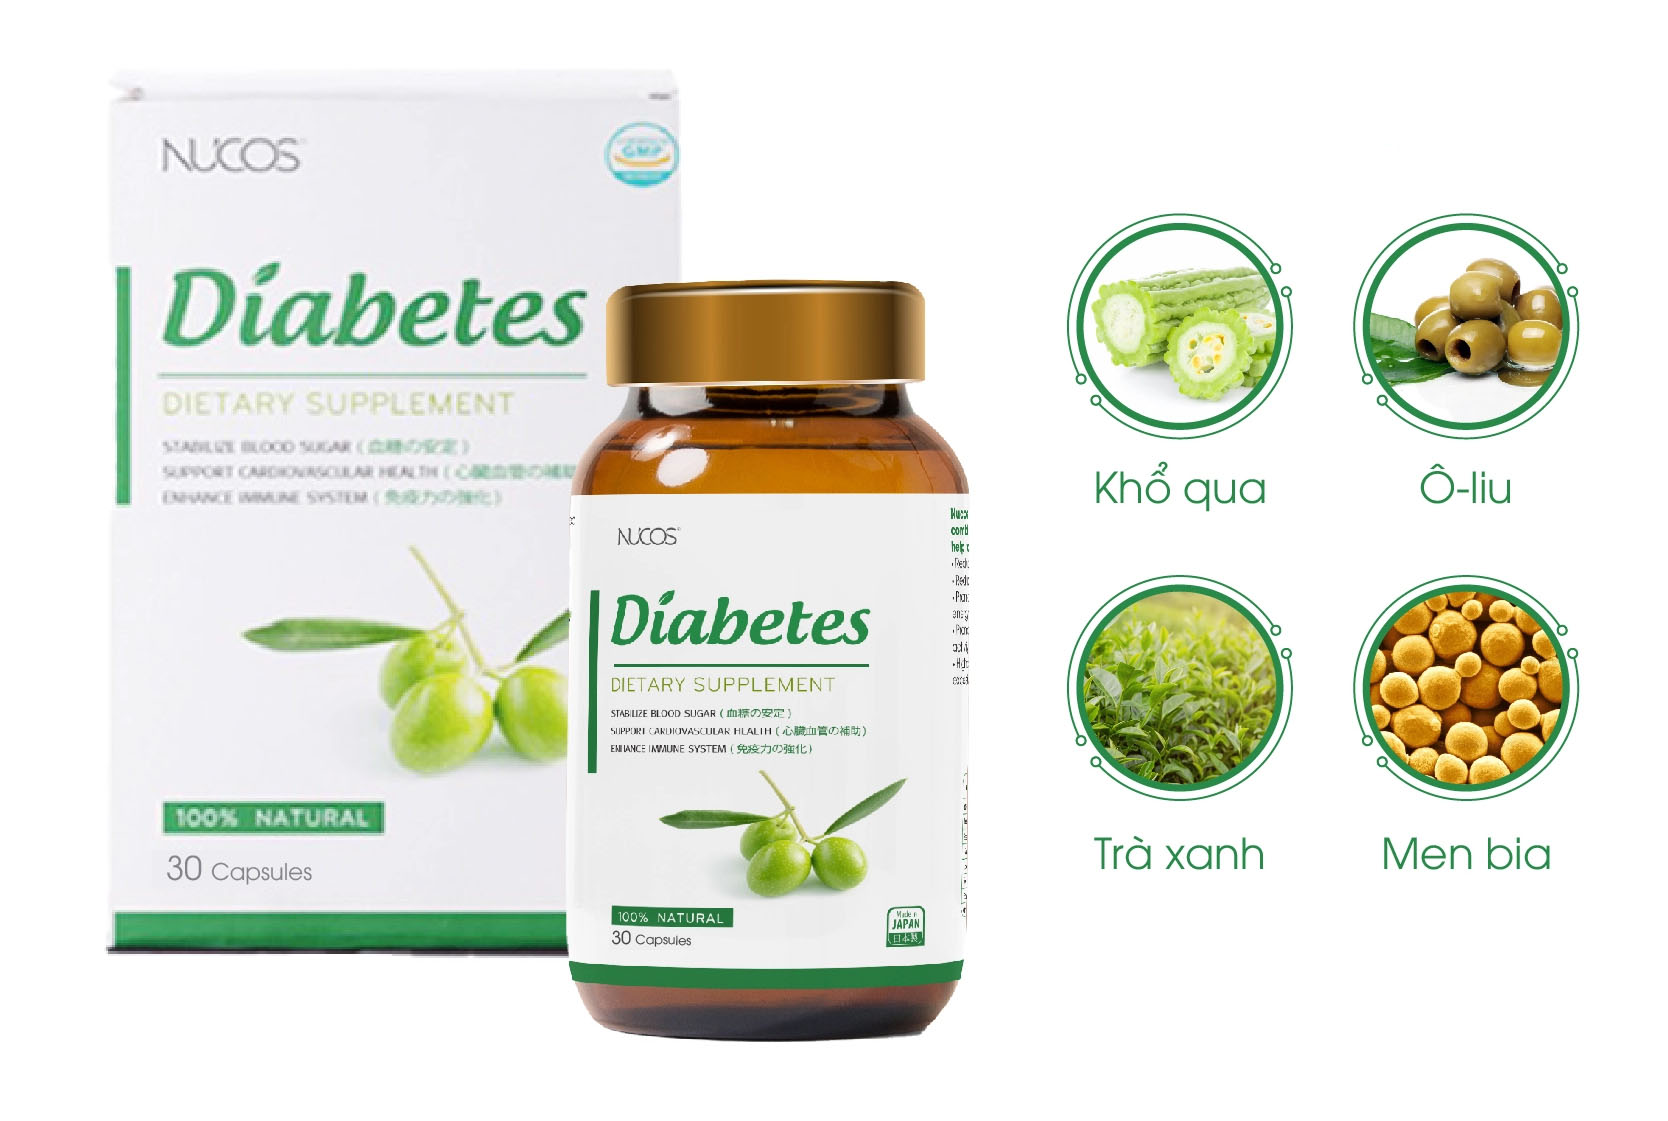 Nucos Diabetes Blood Sugar Balance 30 Tablets